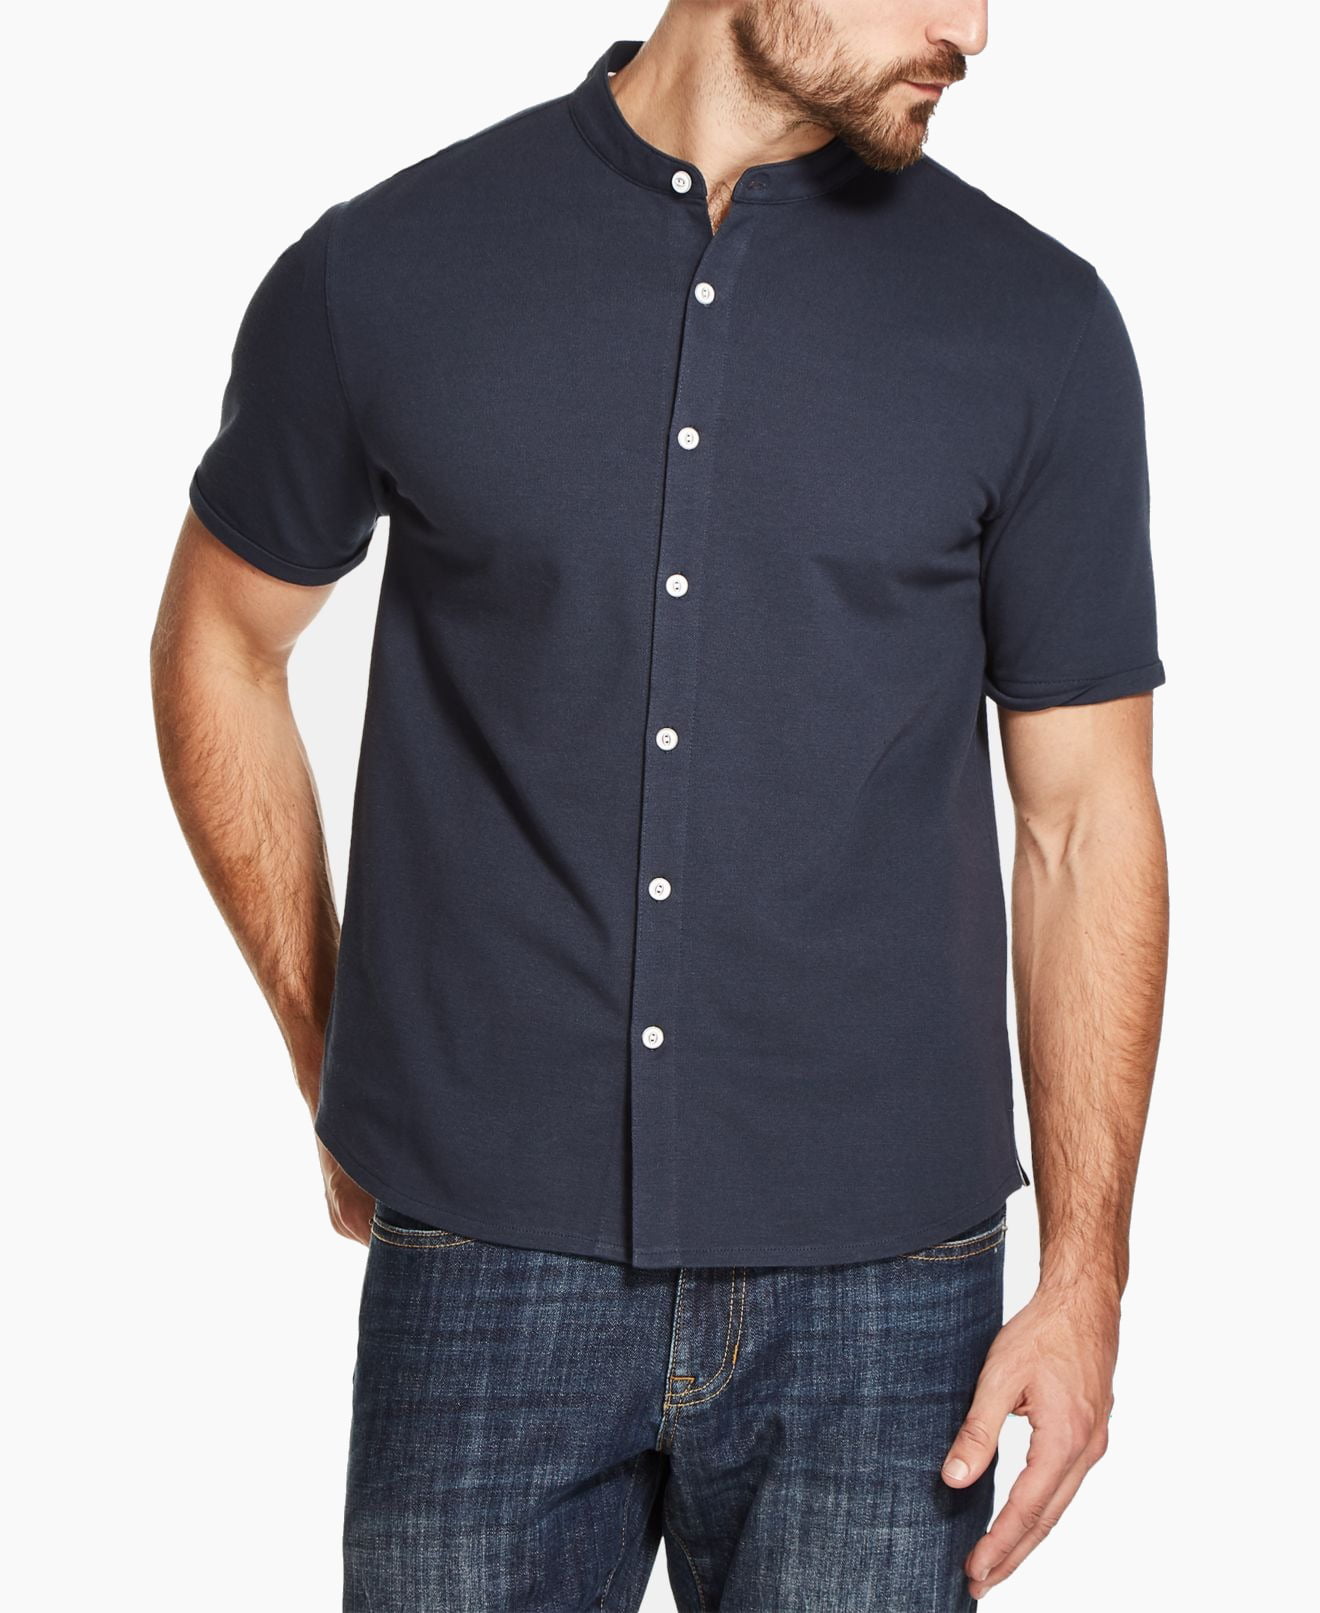 Weatherproof - Mens Shirt Navy Short Sleeve Banded Collar 2XL - Walmart ...